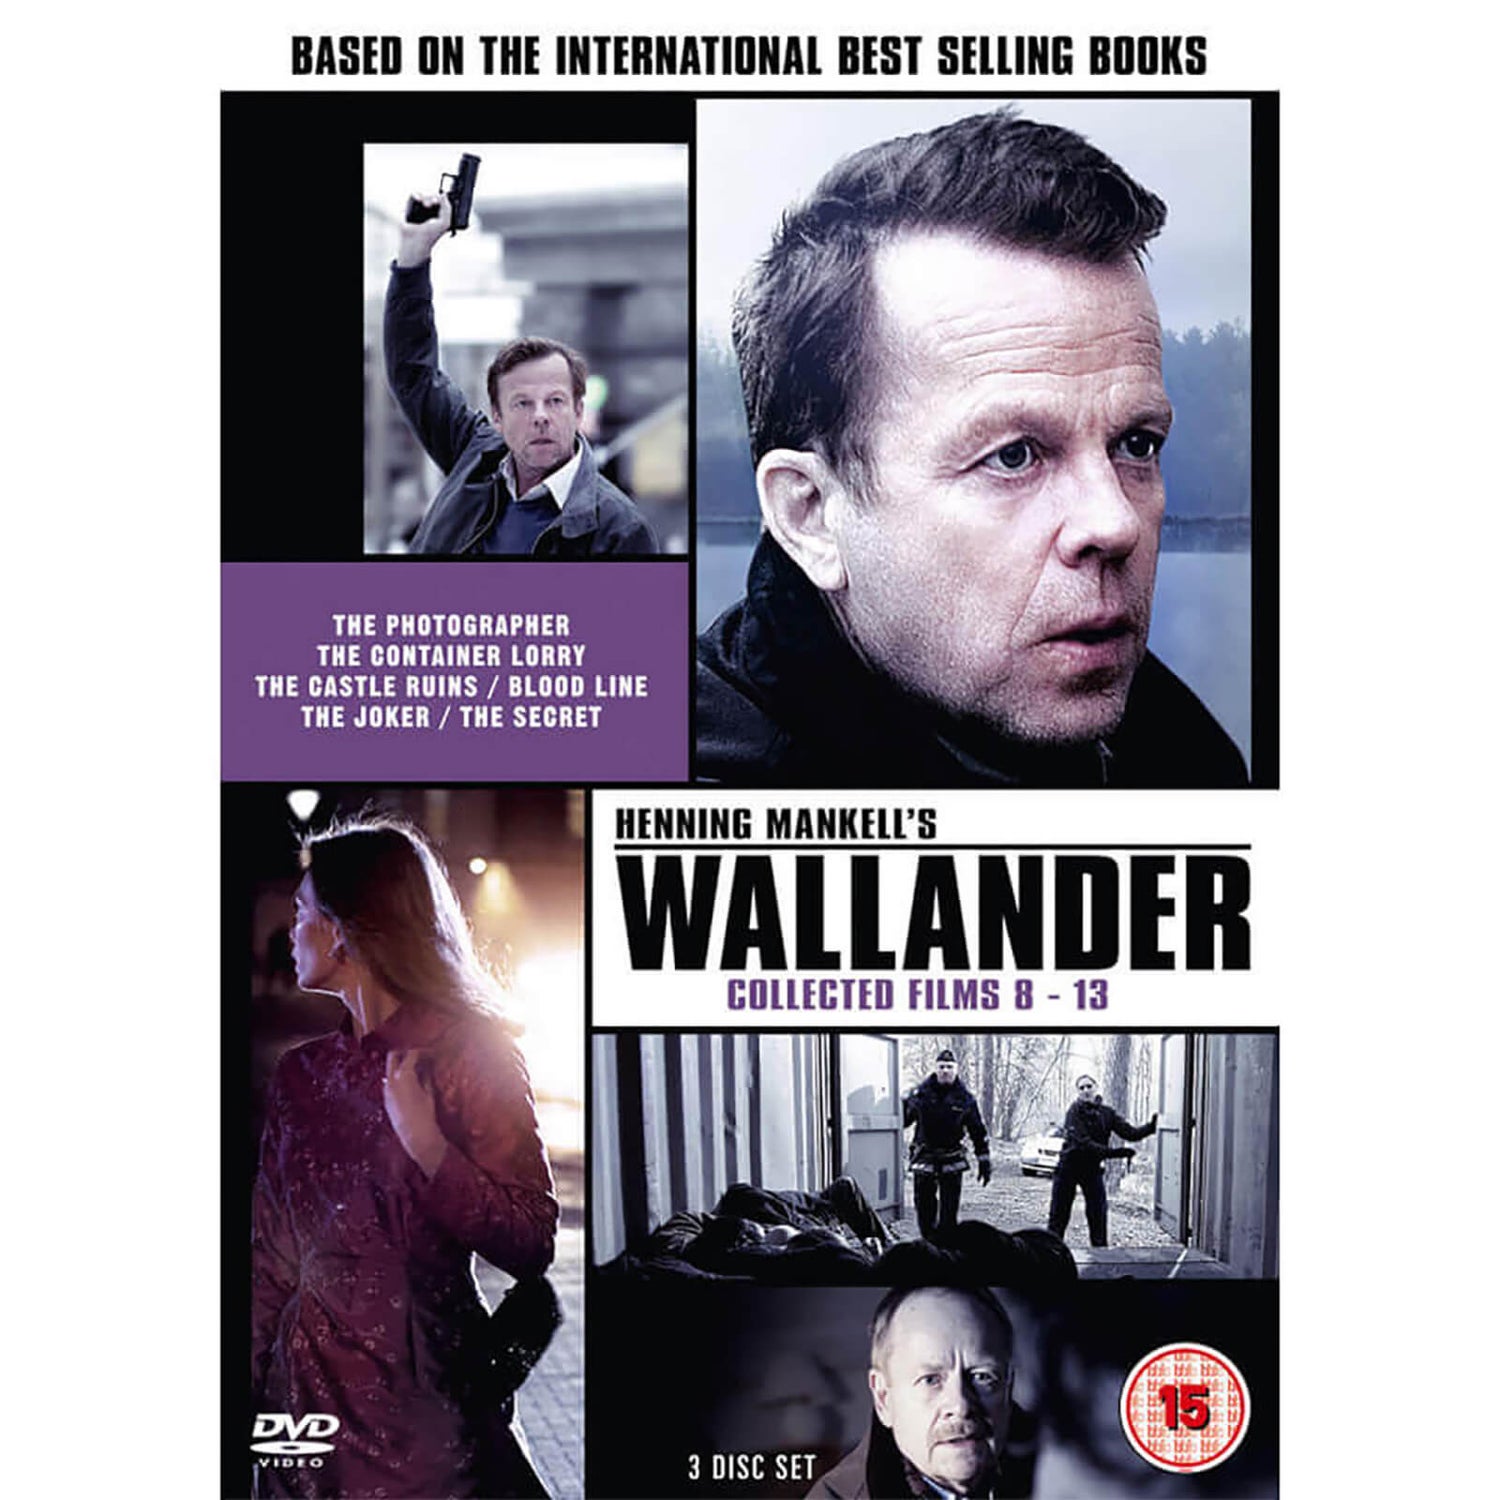 Wallander Collected Films 8-13 DVD